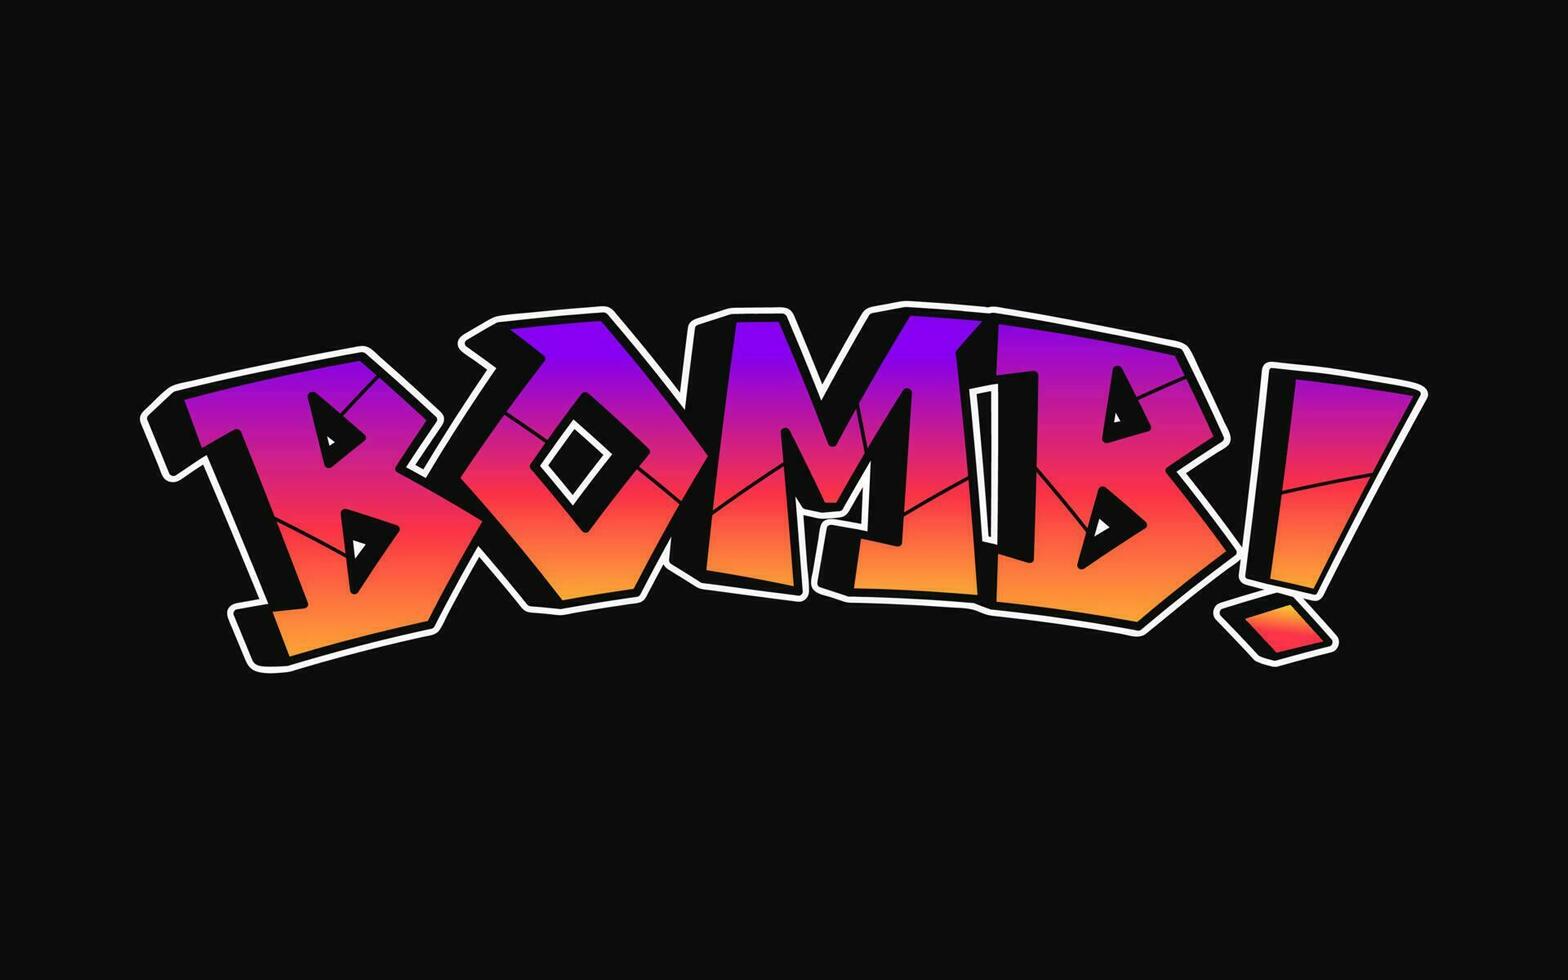 bom - single woord, brieven graffiti stijl. vector hand- getrokken logo. grappig koel trippy woord bom, mode, graffiti stijl afdrukken t-shirt, poster concept